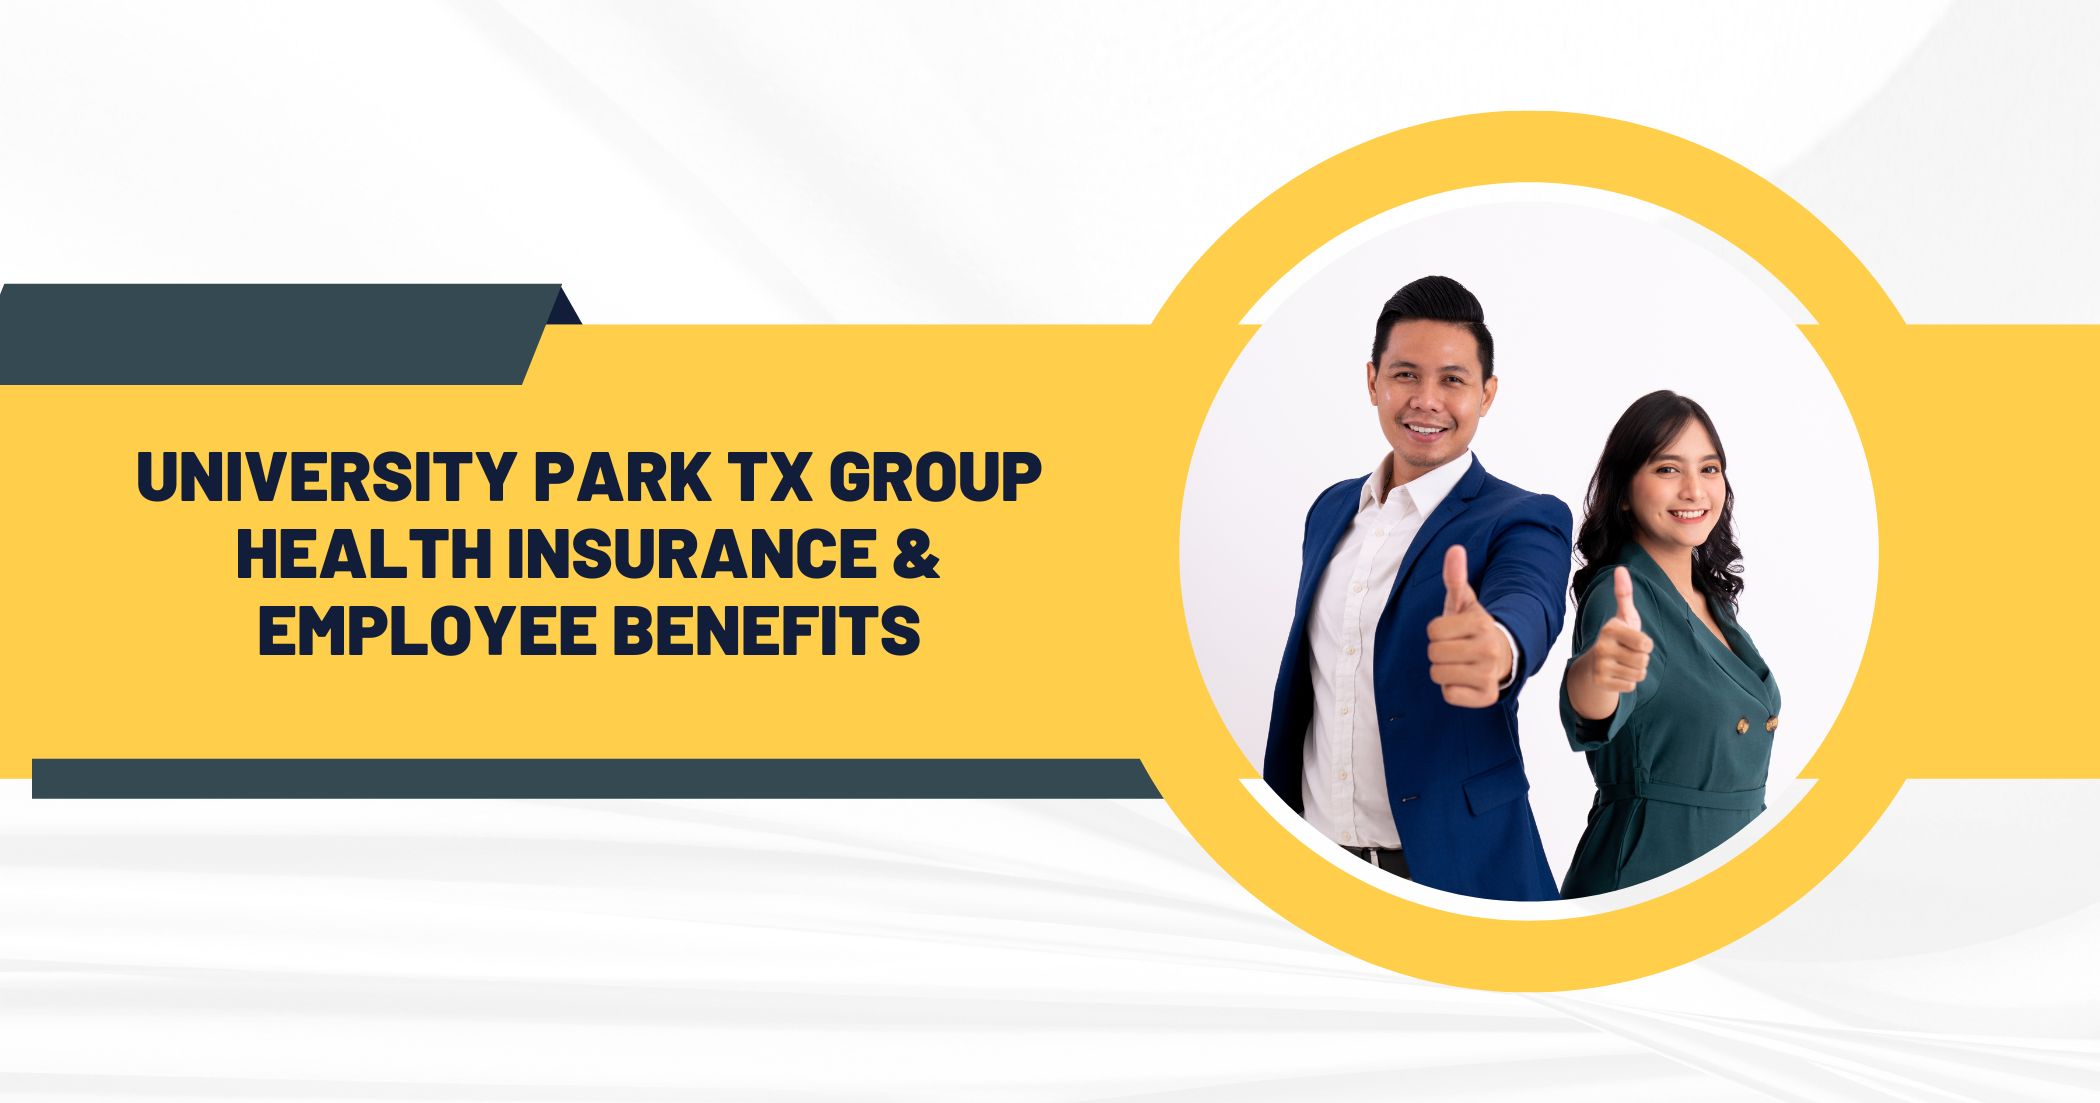 University Park TX Group Health Insurance & Employee Benefits